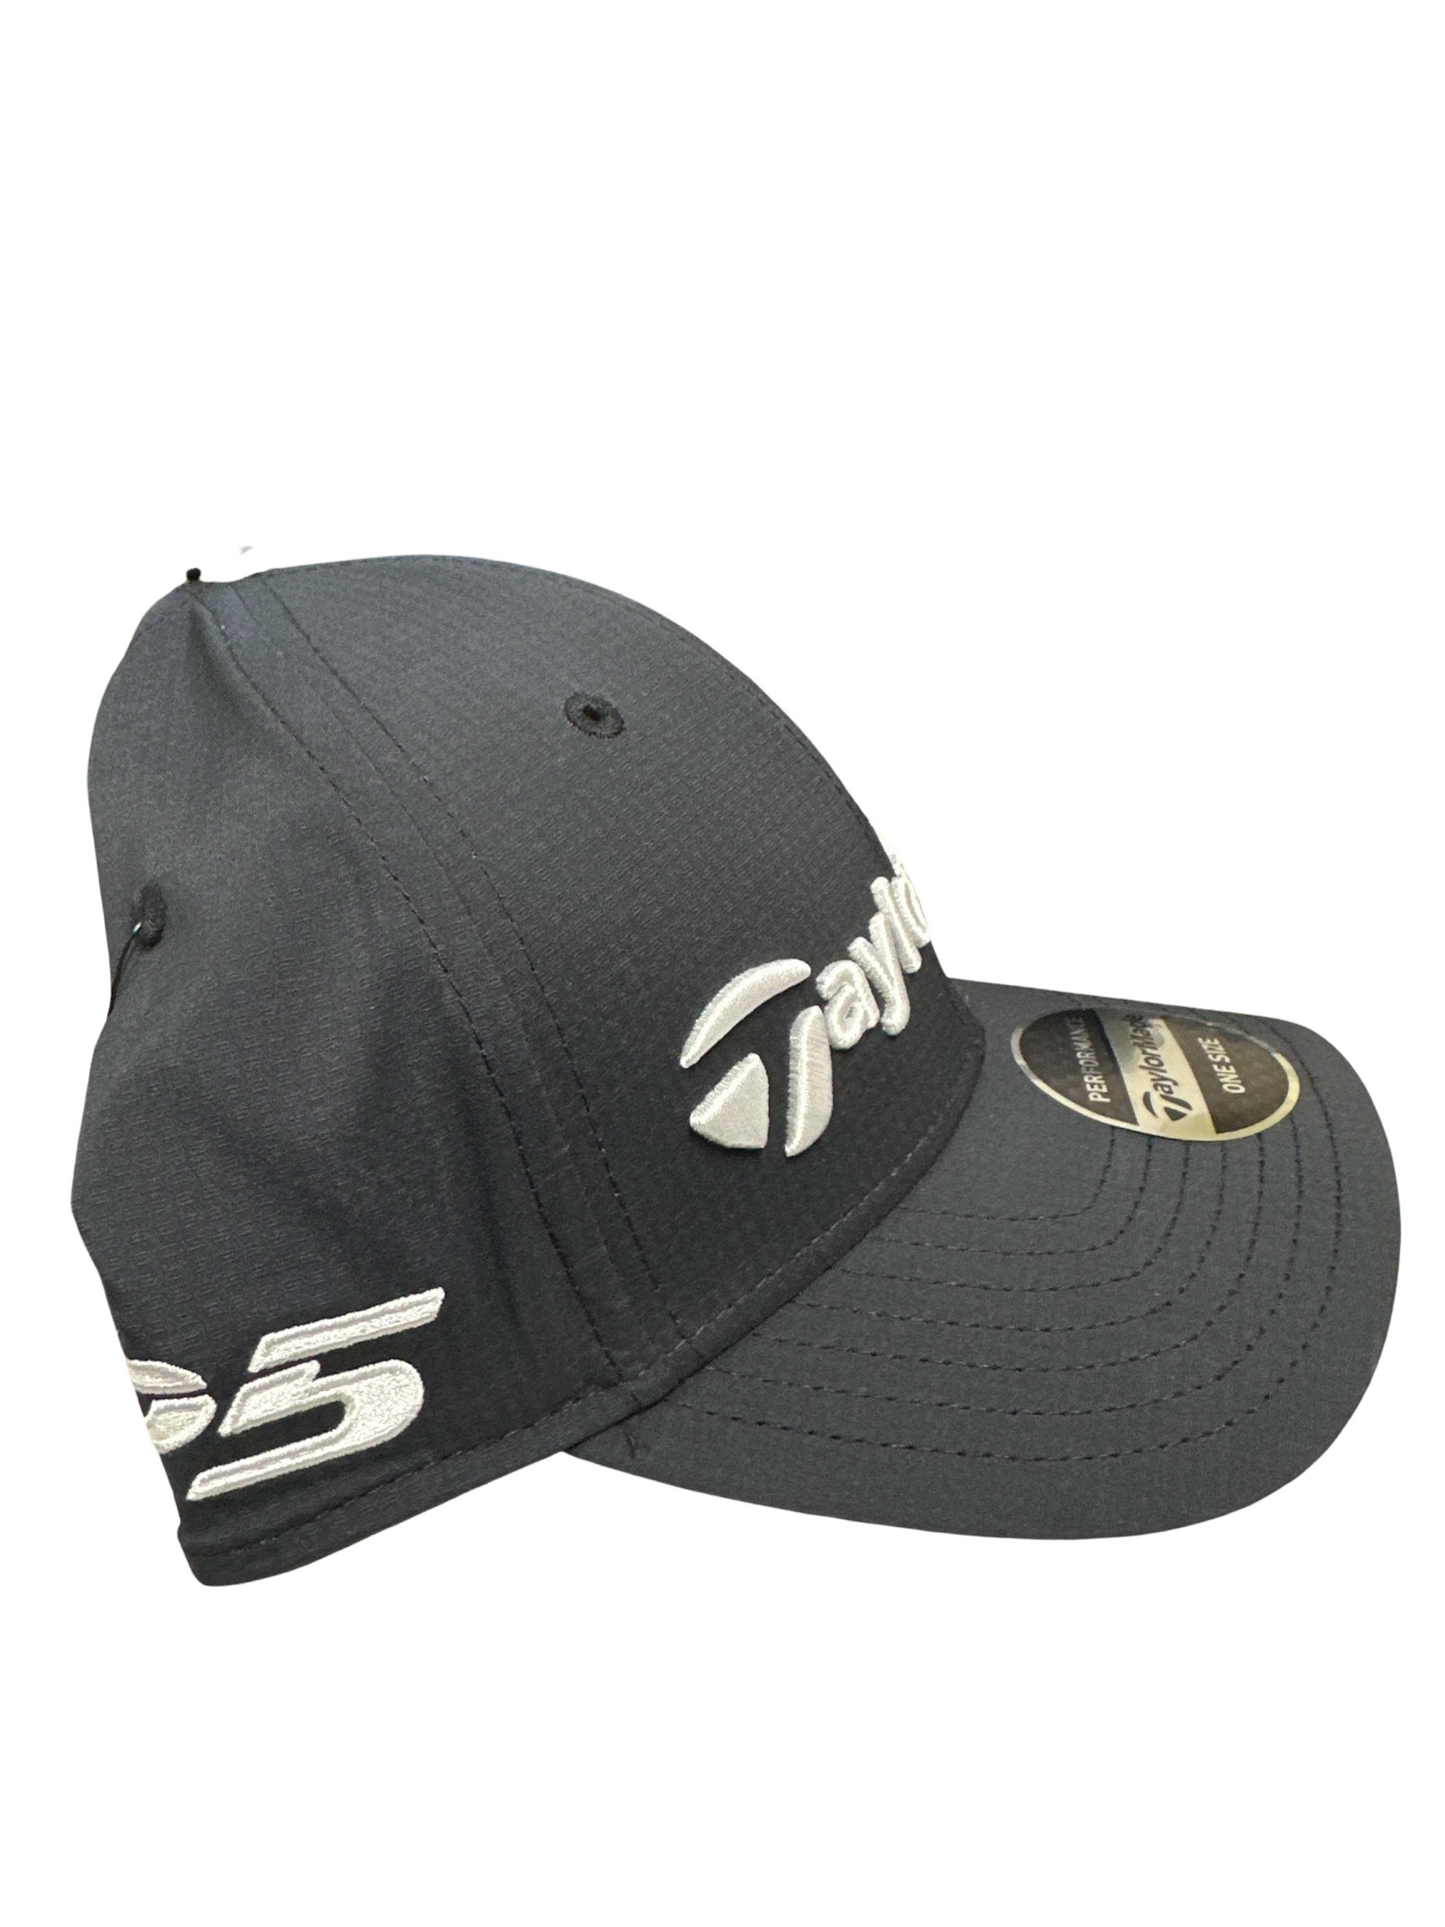 Taylormade Golf Hat - Black